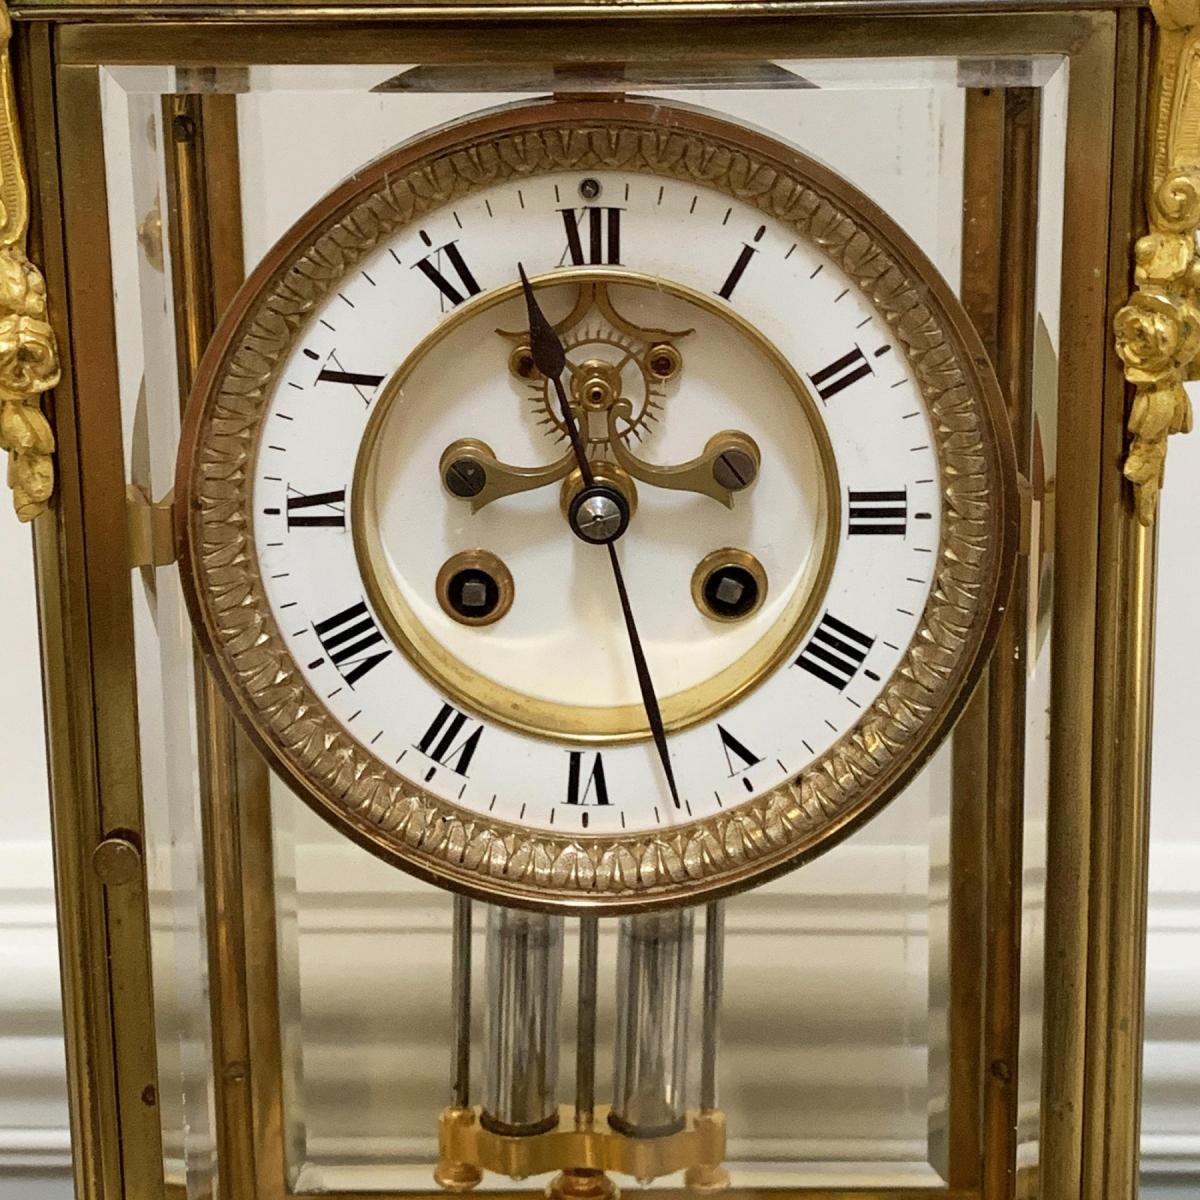 French 8 Day Striking Four Glass Ormolu Clock By Samuel Marti Paris, 19th Century